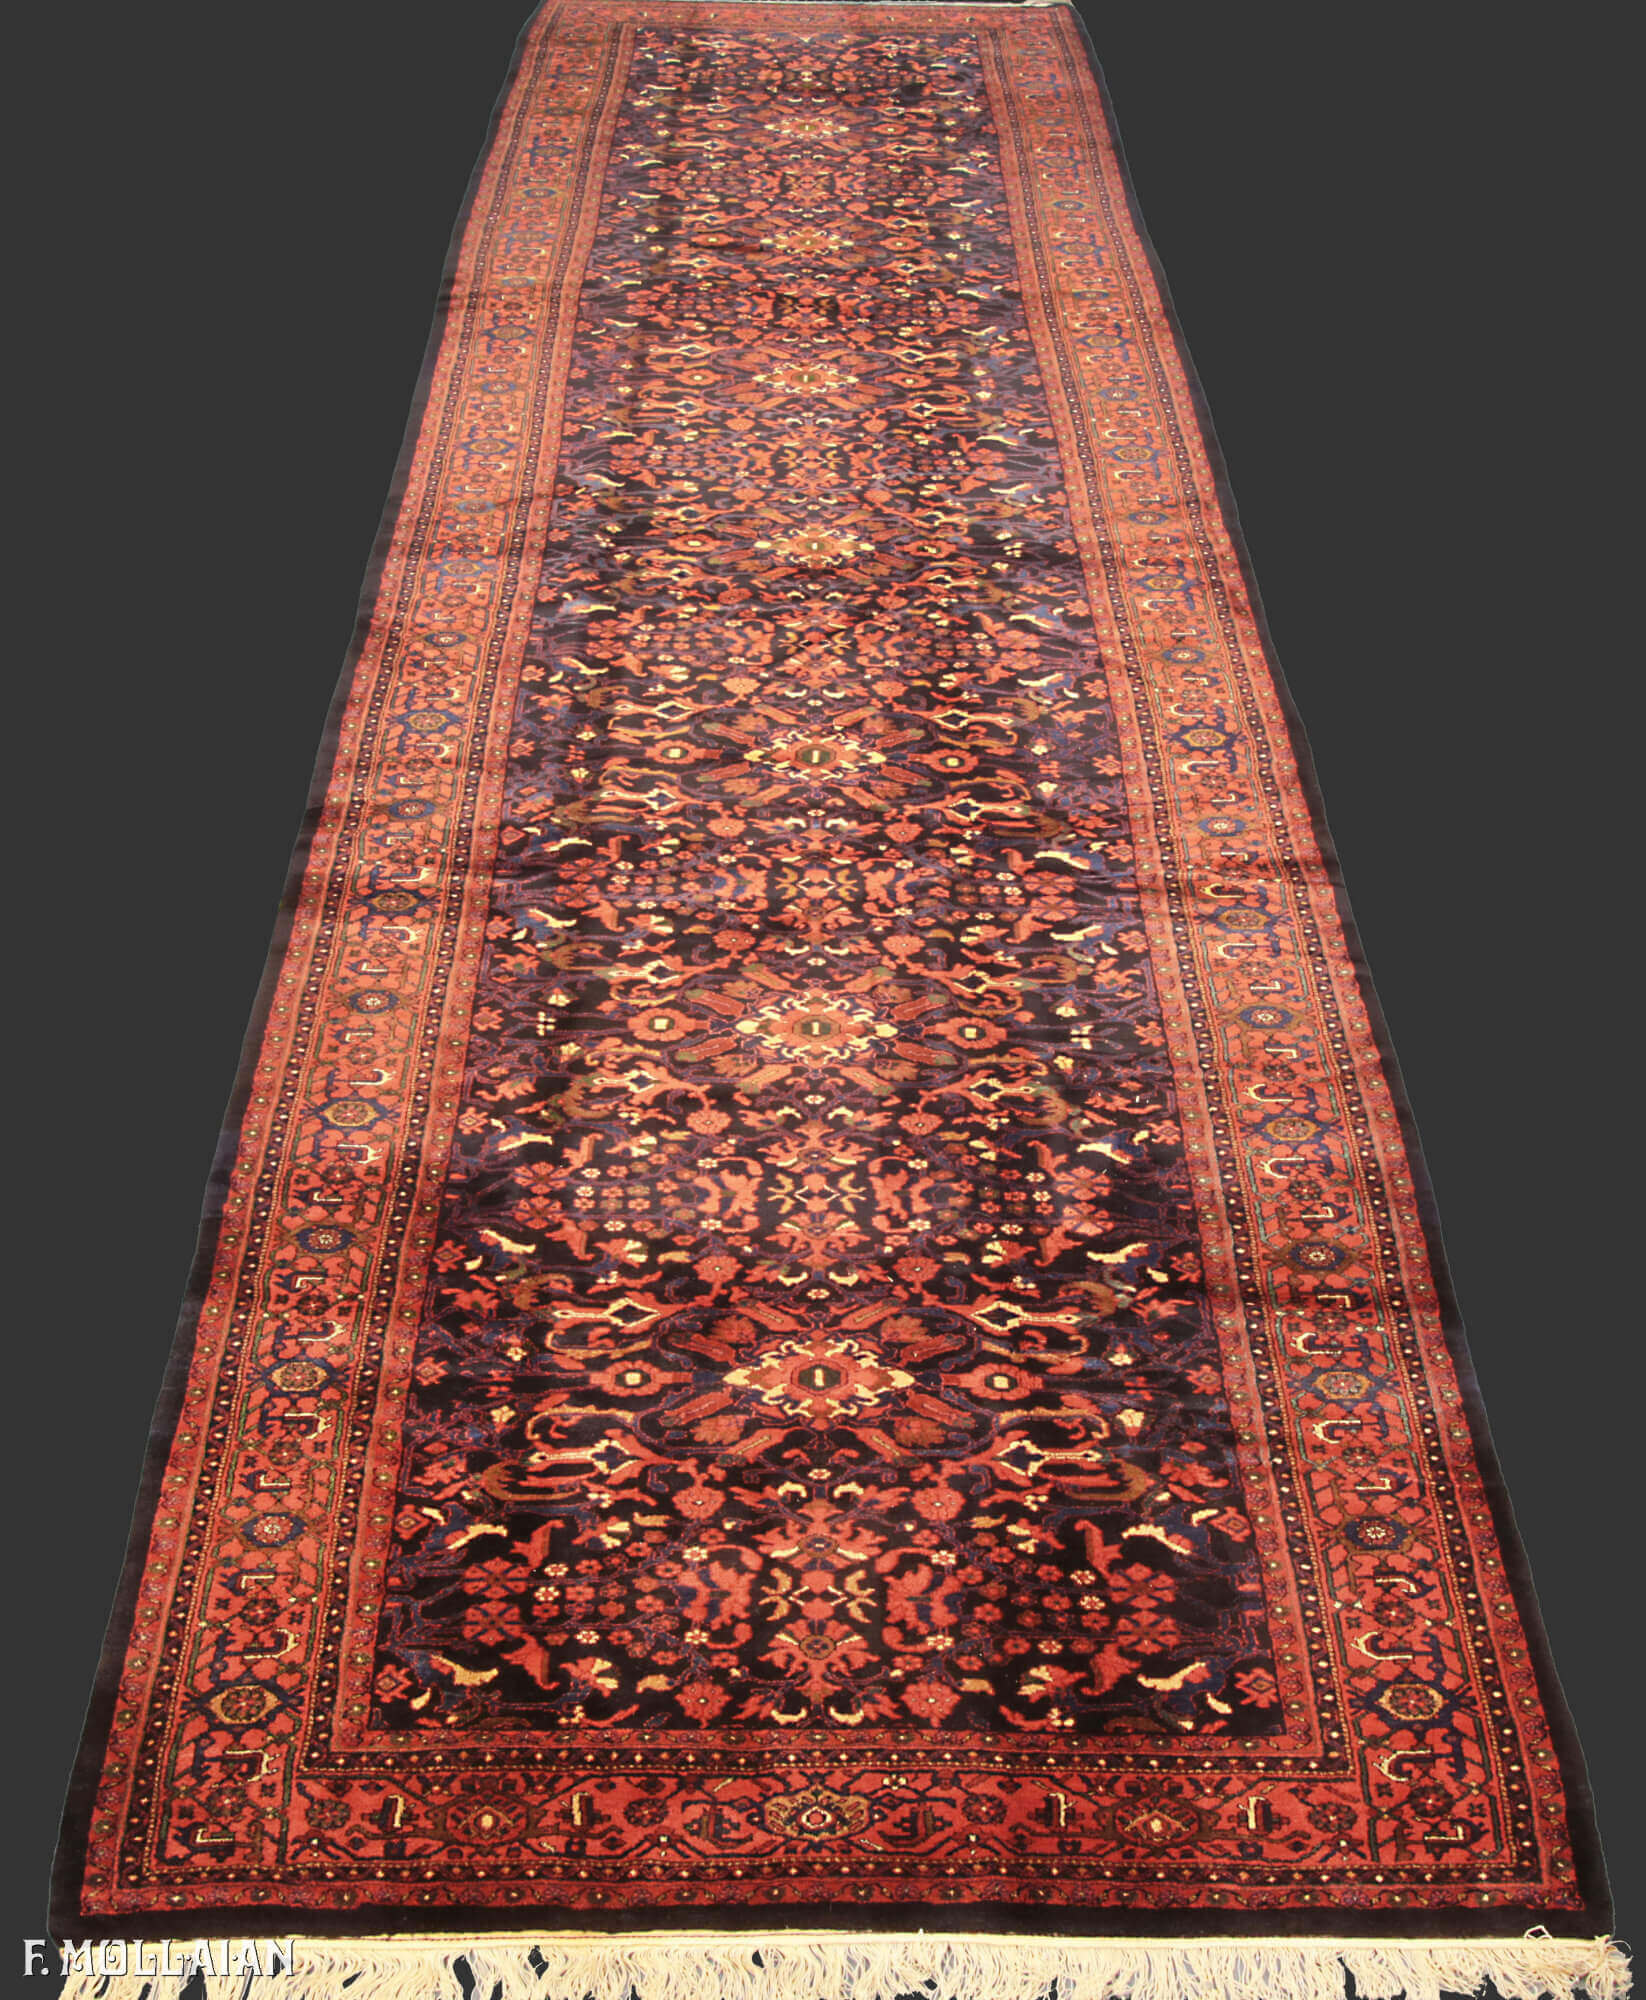 Persian Mishan Antique Kalleh Size Carpet n°:97833949